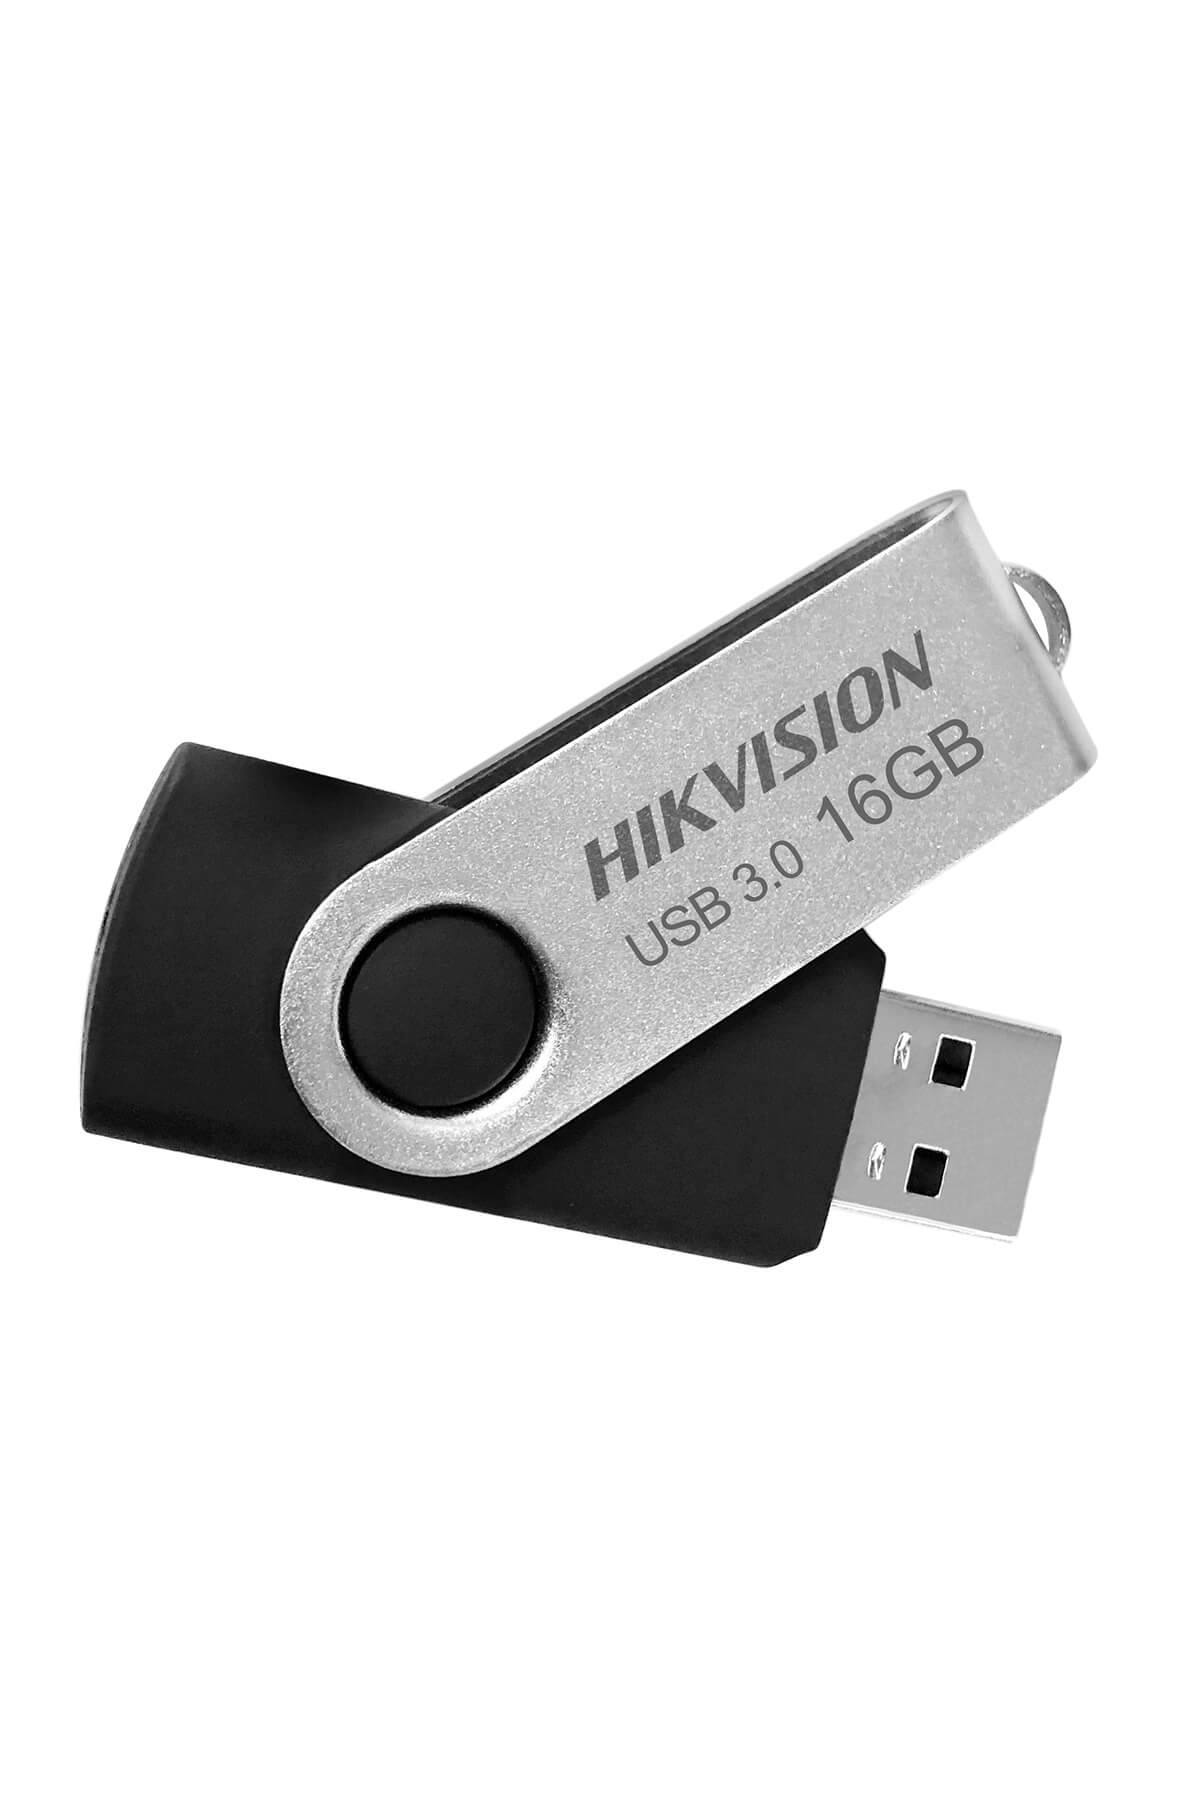 HIKVISION M 200 S 2.0 Usb Flash Bellek 16 GB